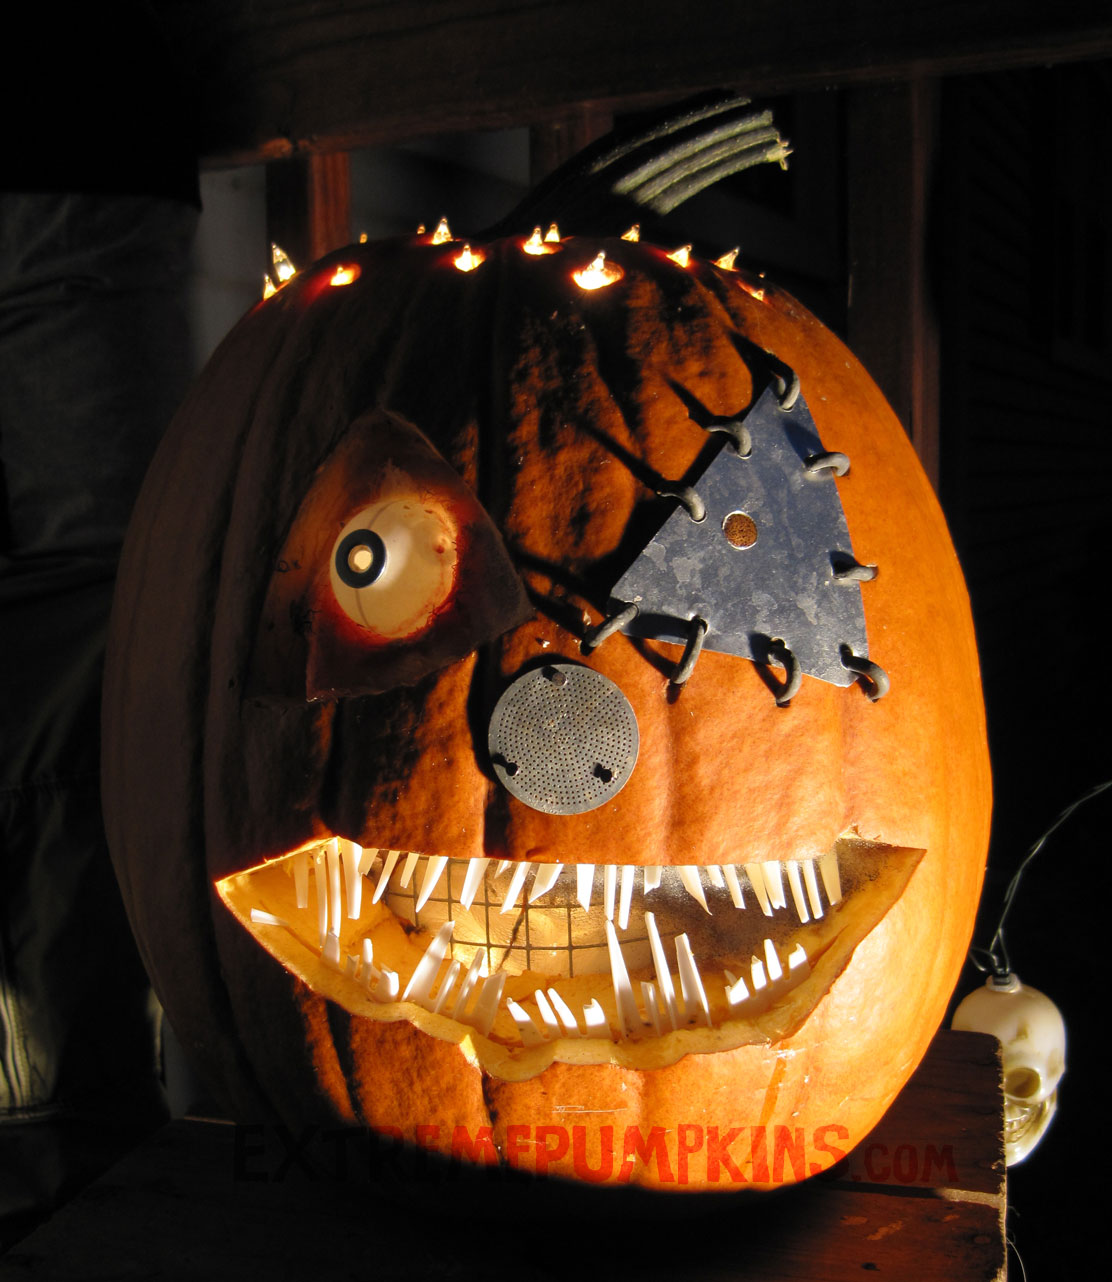 The 2010 FrankenPumpkin